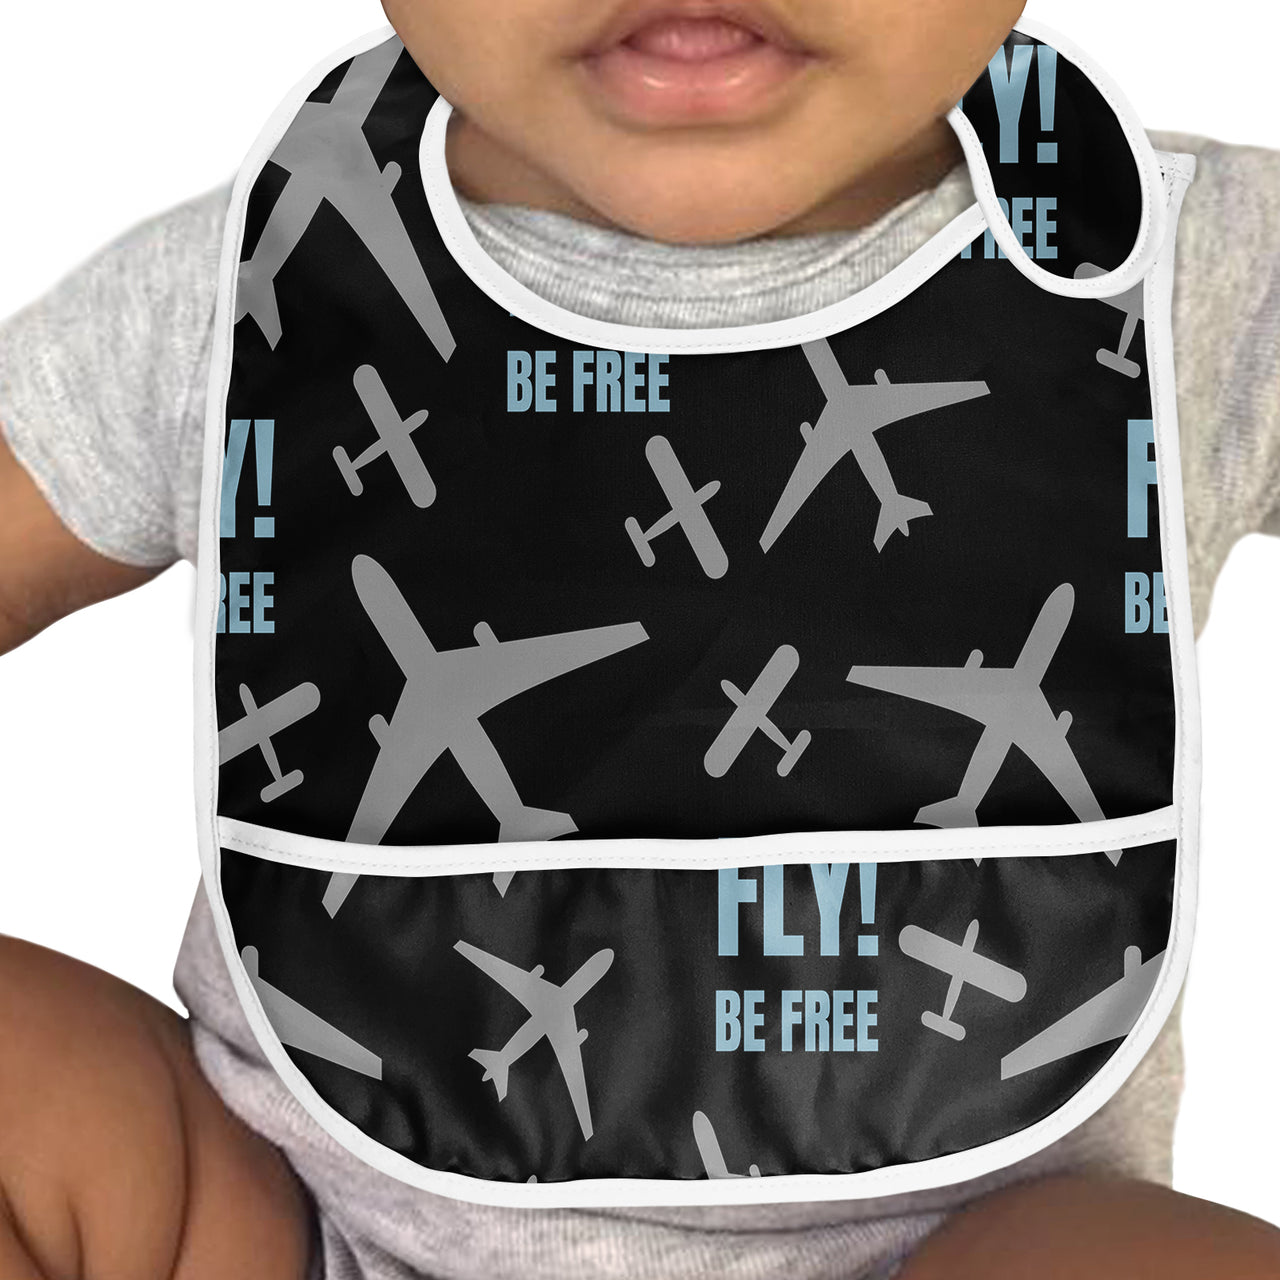 Fly Be Free Black Designed Baby Bib